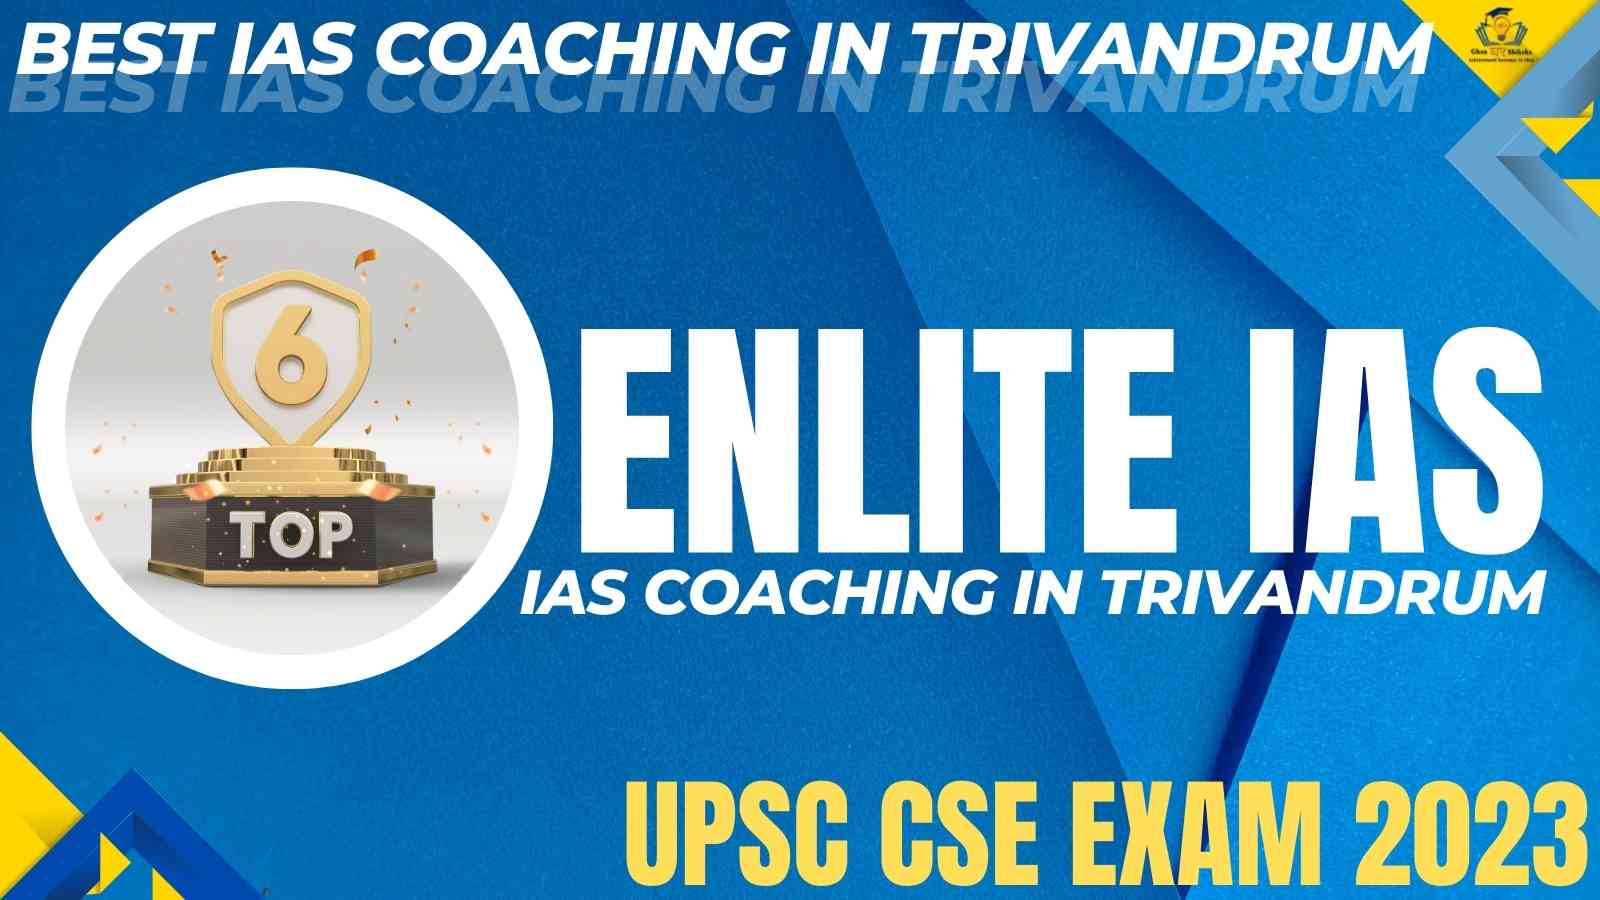 Top IAS Coaching In Trivandrum